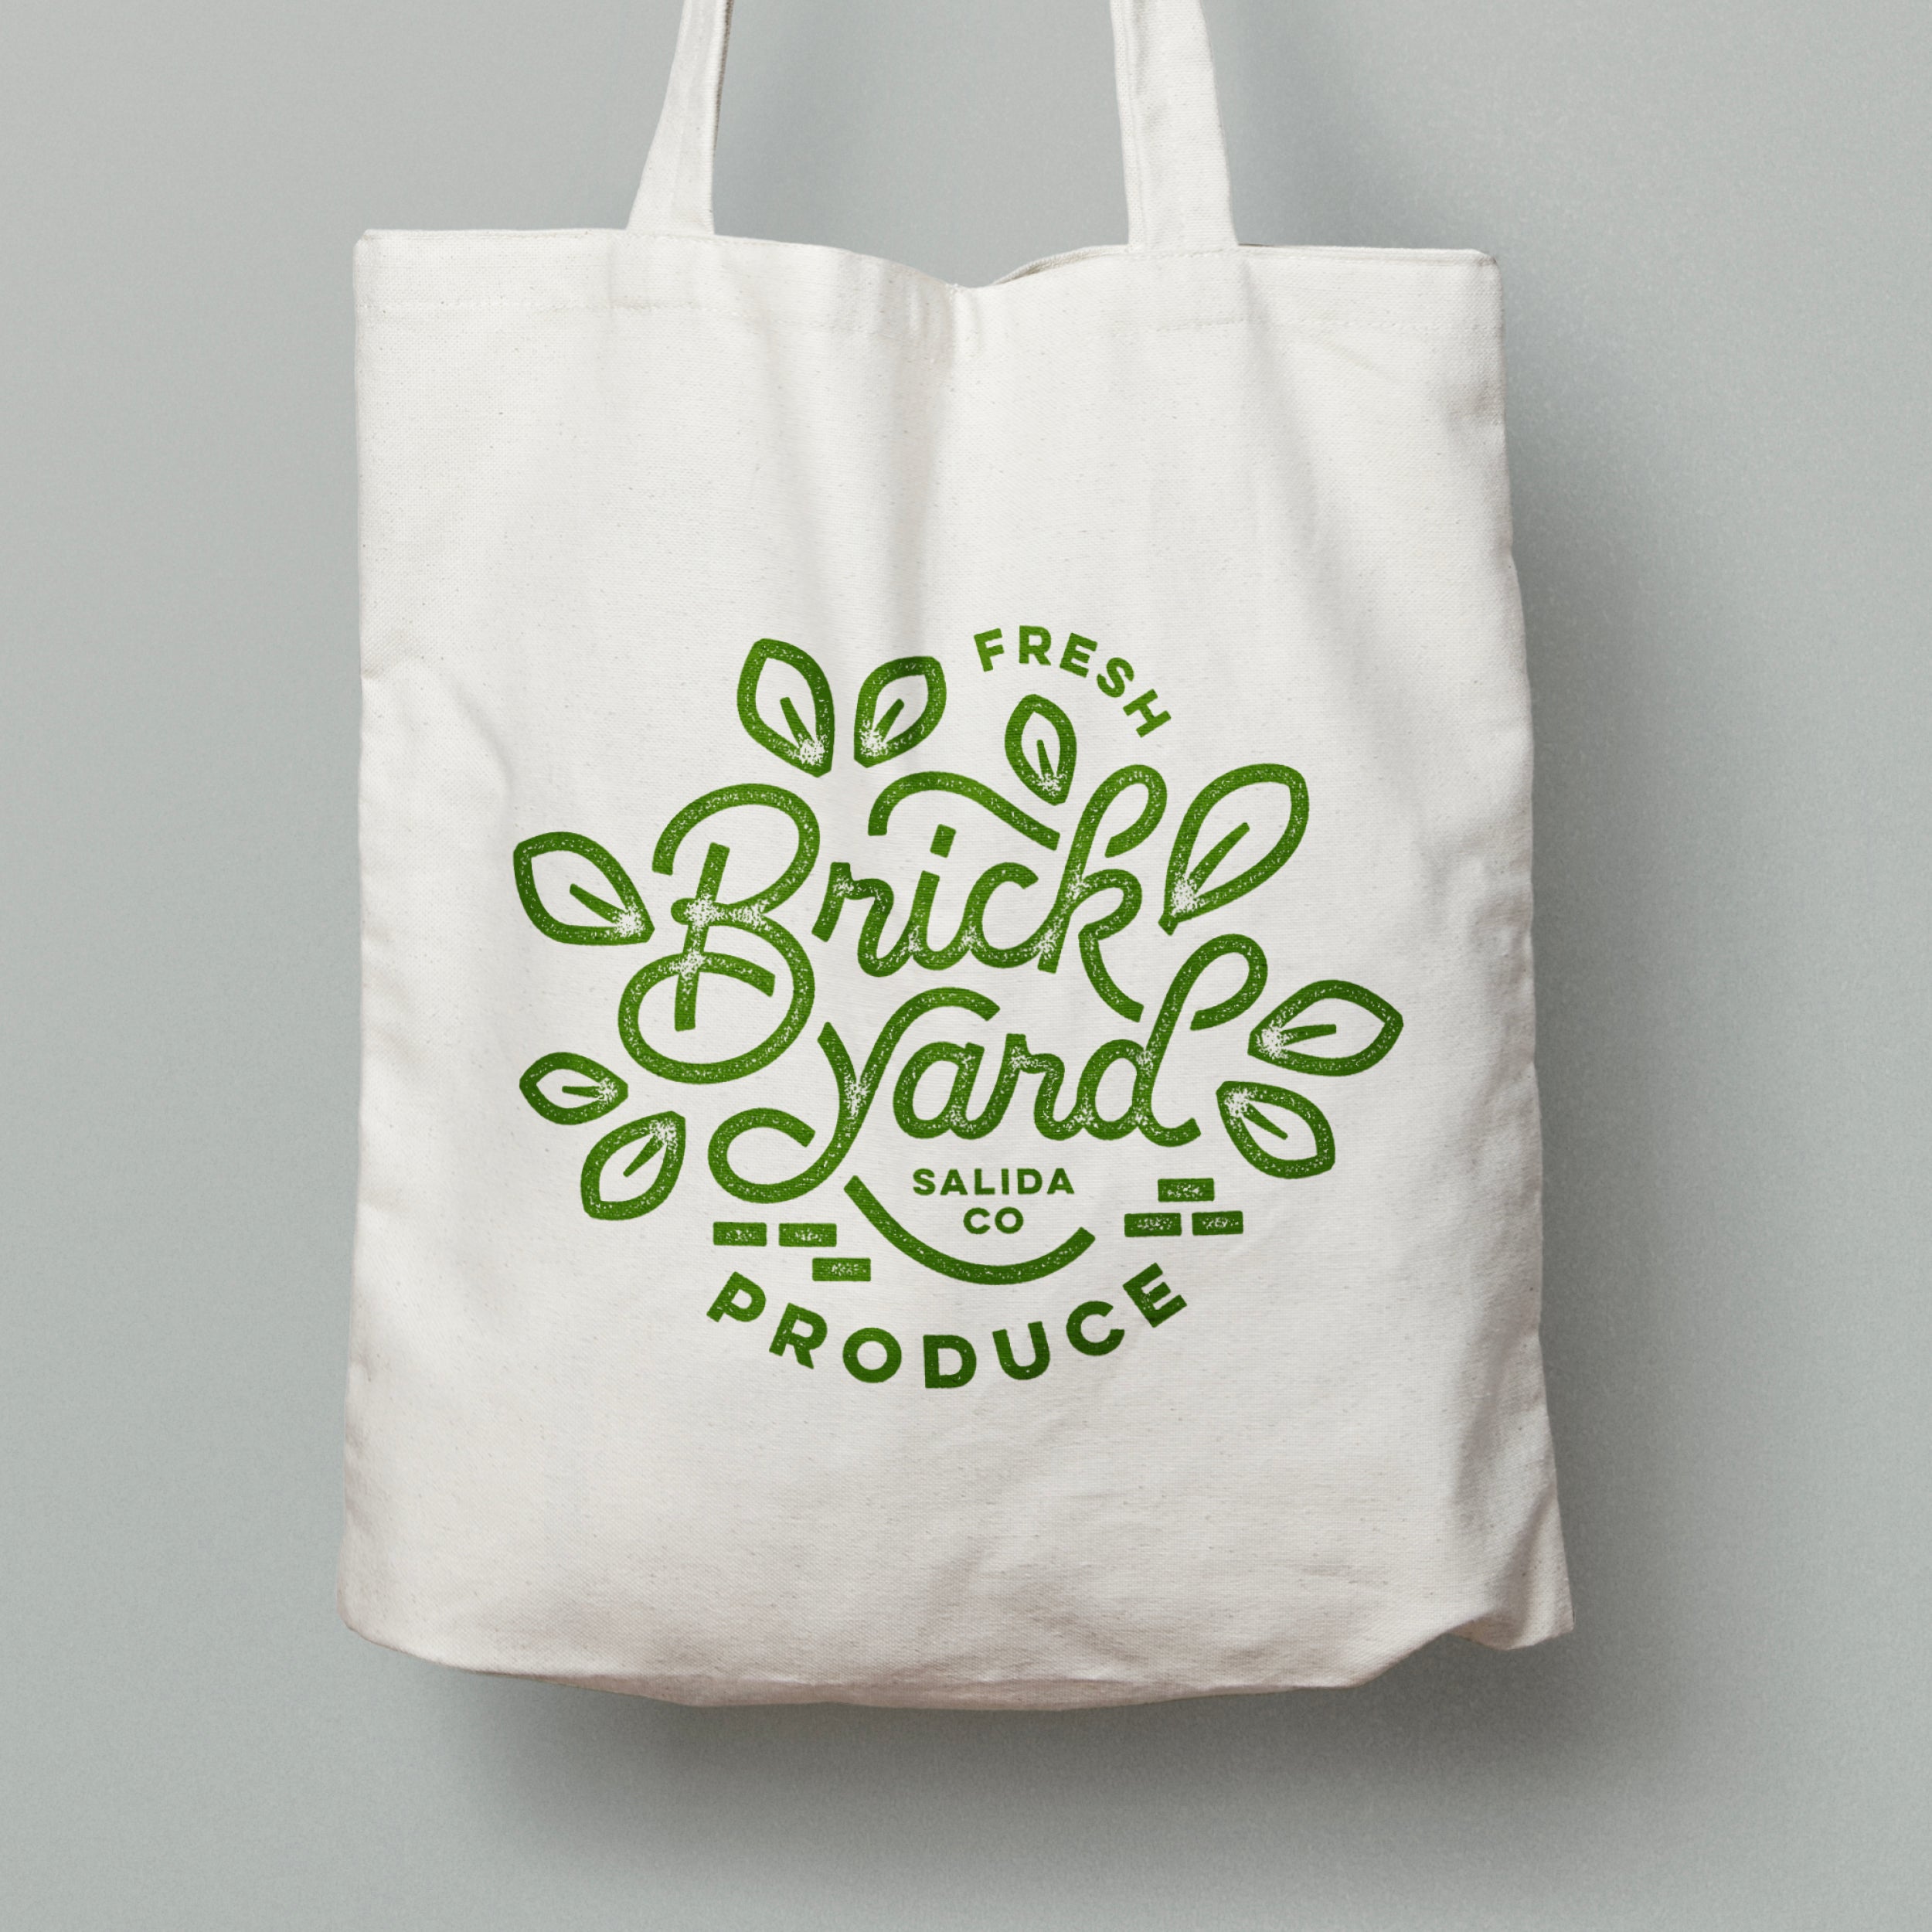 Brickyard Produce bag typography by Sunday Lounge